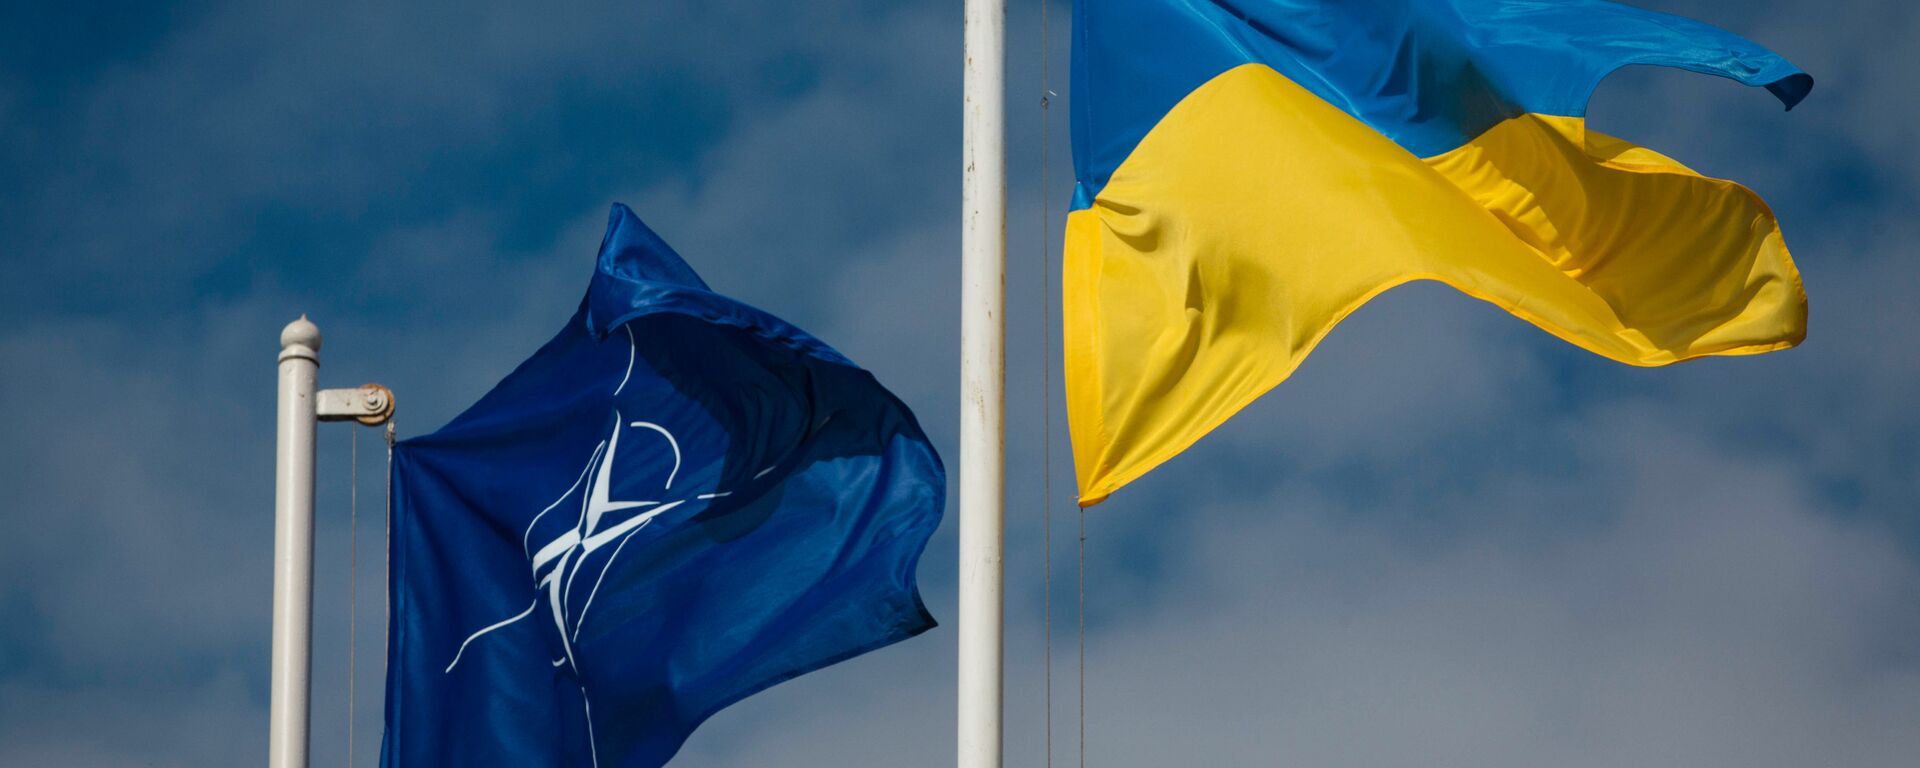 National flag of Ukraine and the NATO flag - Sputnik International, 1920, 14.06.2021